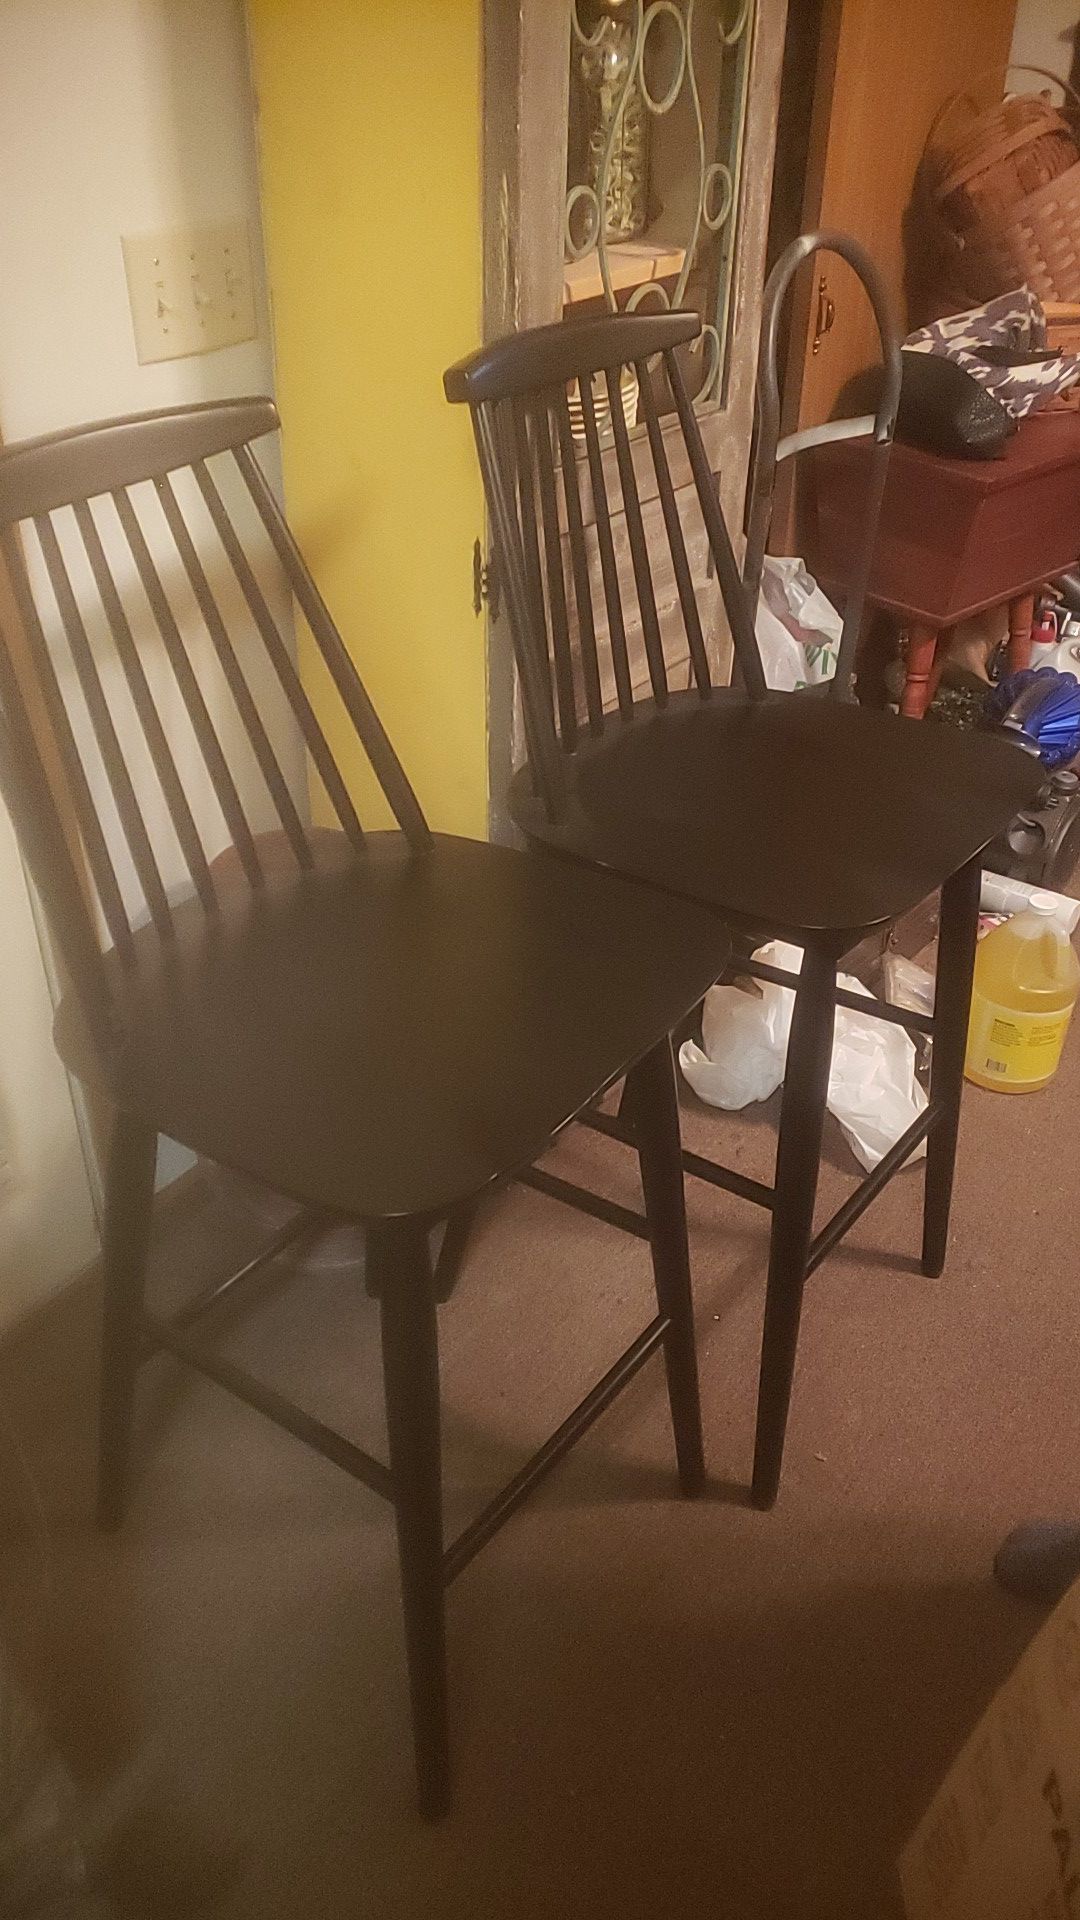 2 black bar stools